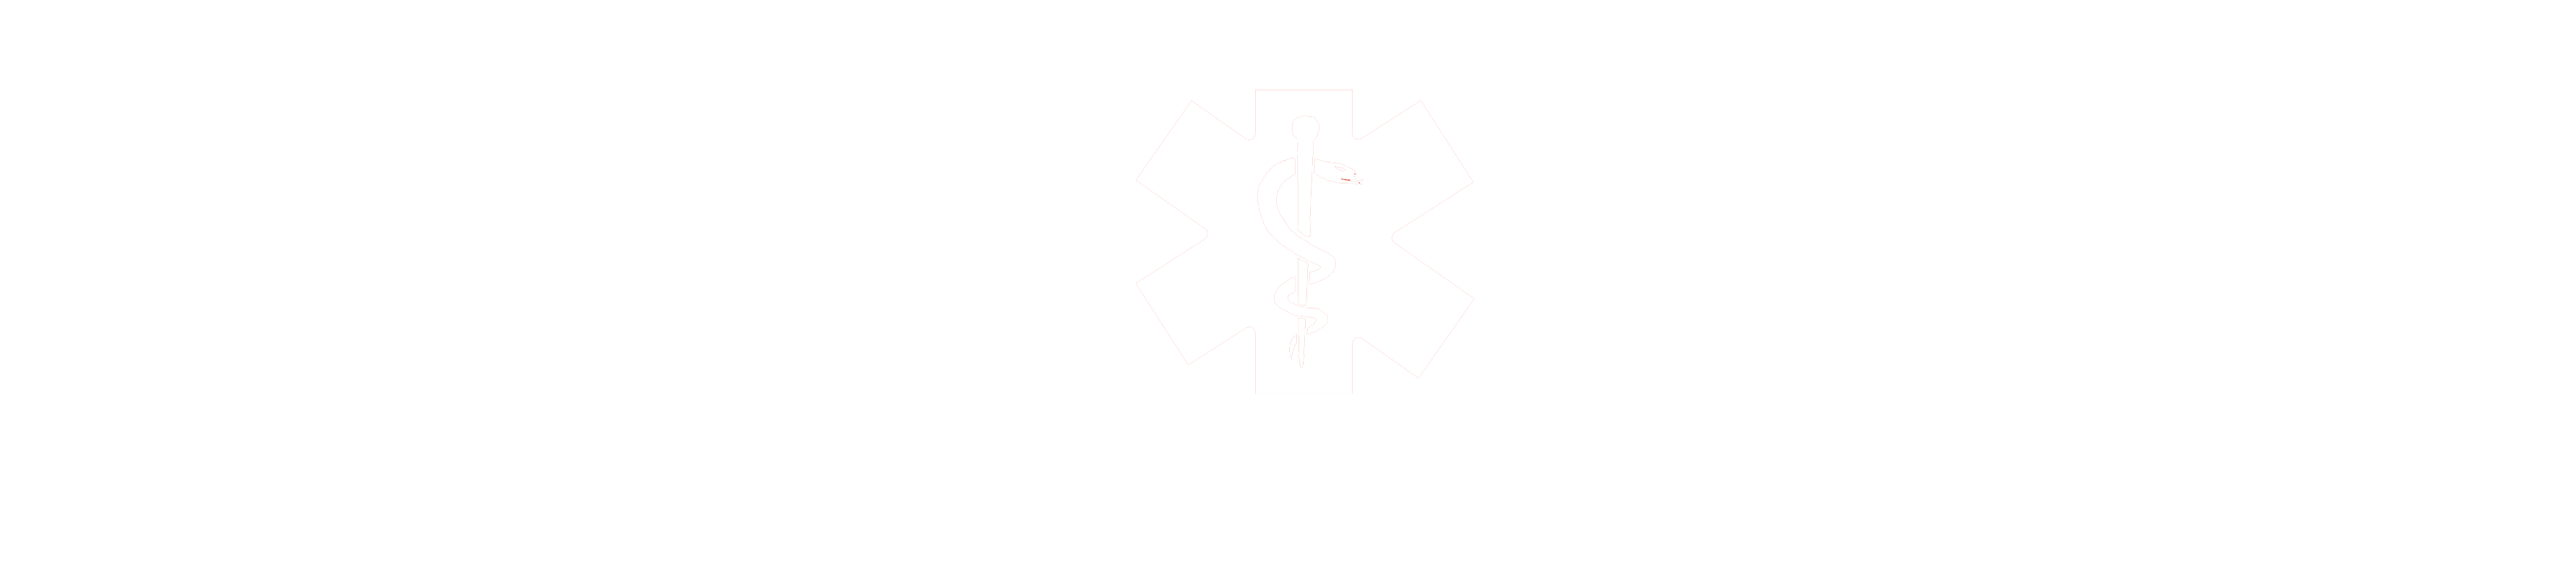 Sanitätshaus & Rehatechnik Hamburg SRH-GmbH